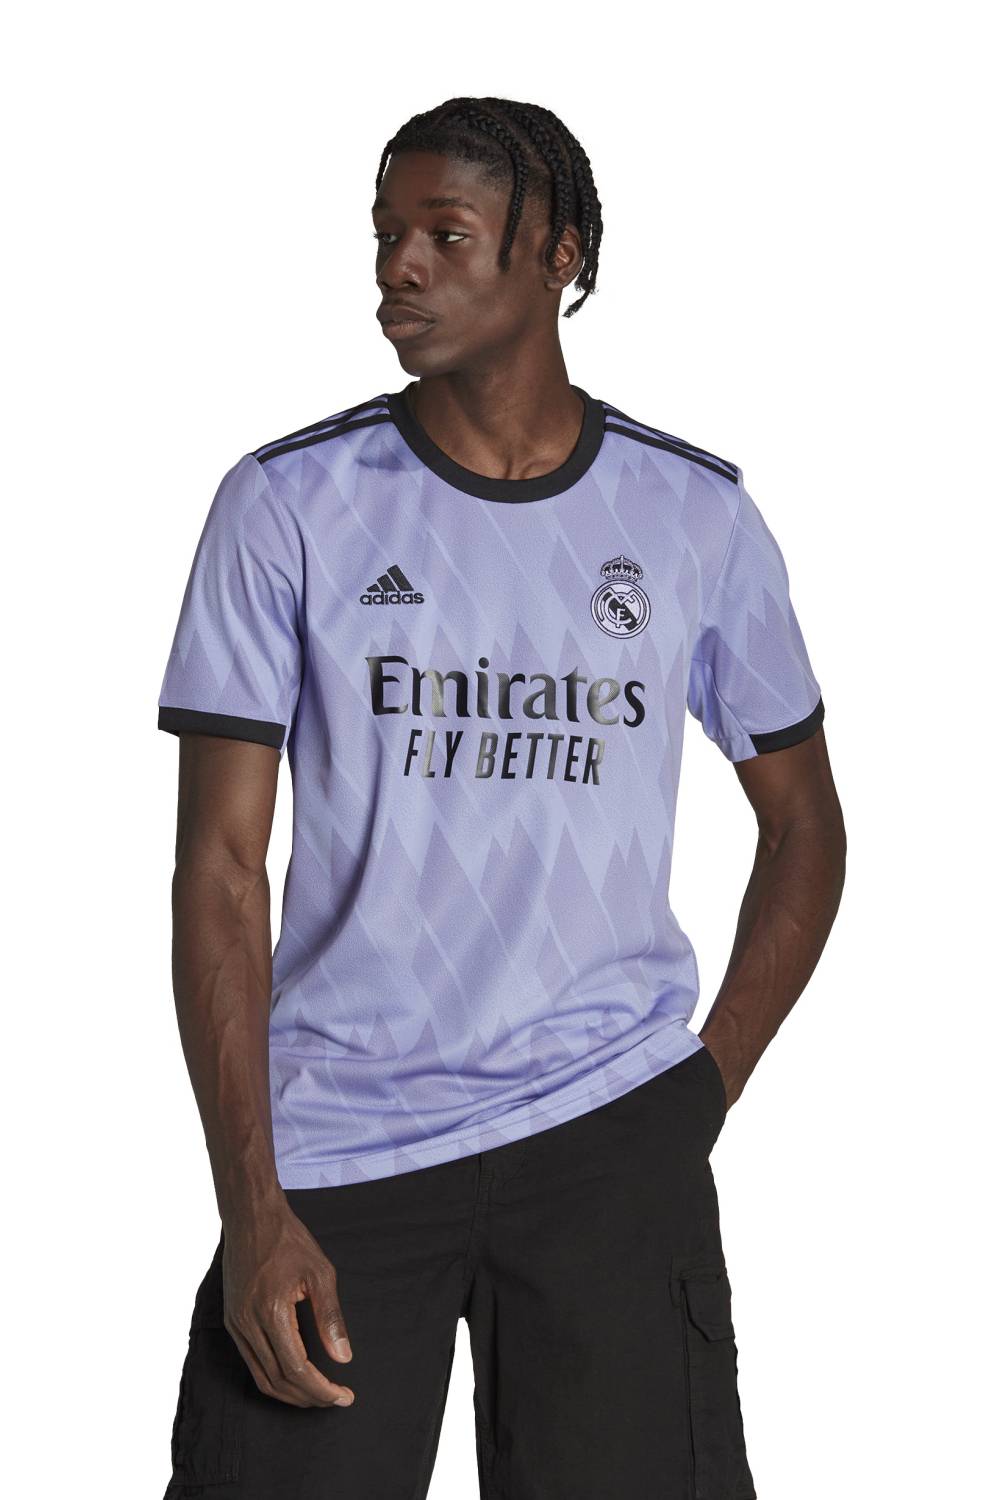 ADIDAS - Adidas Camiseta De Fútbol Real Madrid Visita